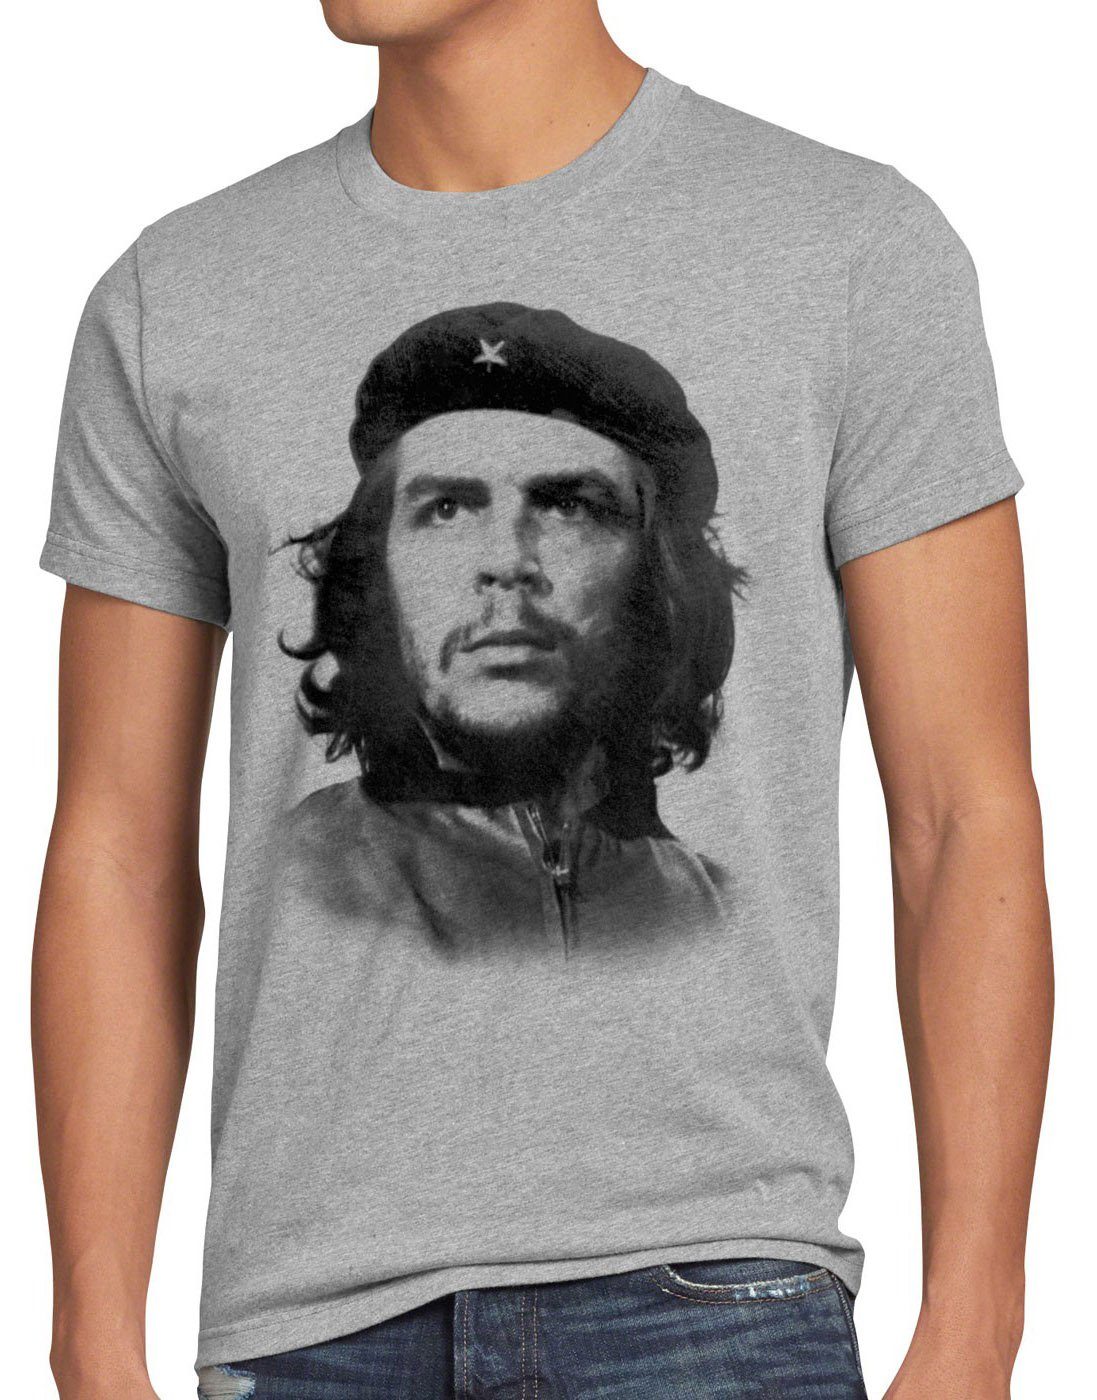 meliert T-Shirt Print-Shirt Havana CHE Guevara Herren kuba Foto style3 Kommunismus cuba grau castro revolution